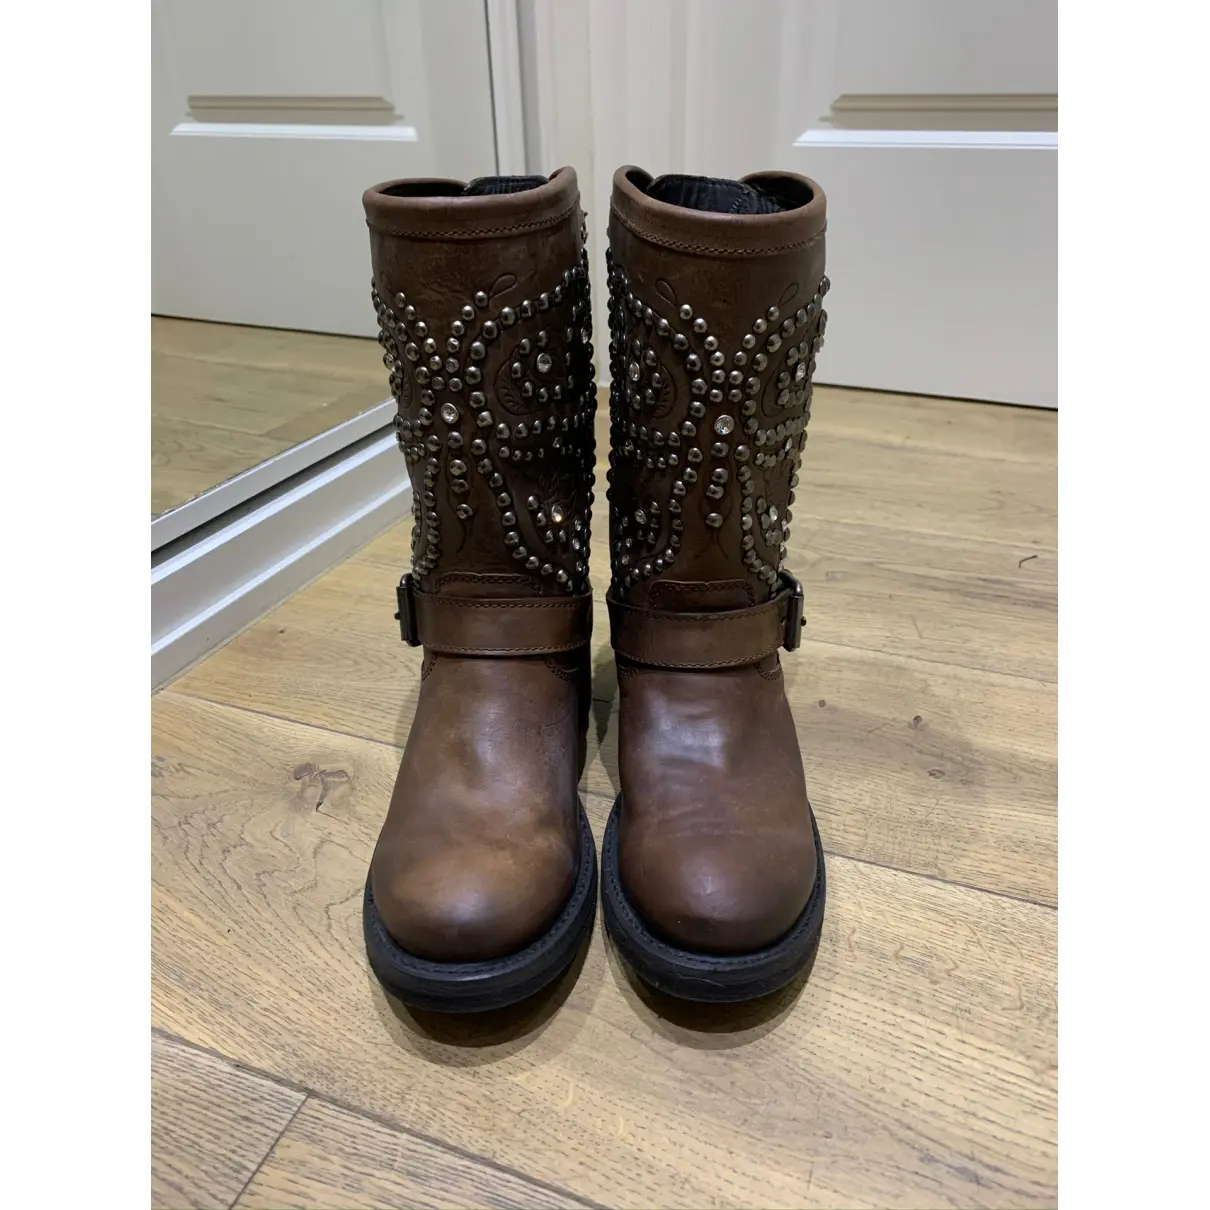 Buy Ash Leather cowboy boots online